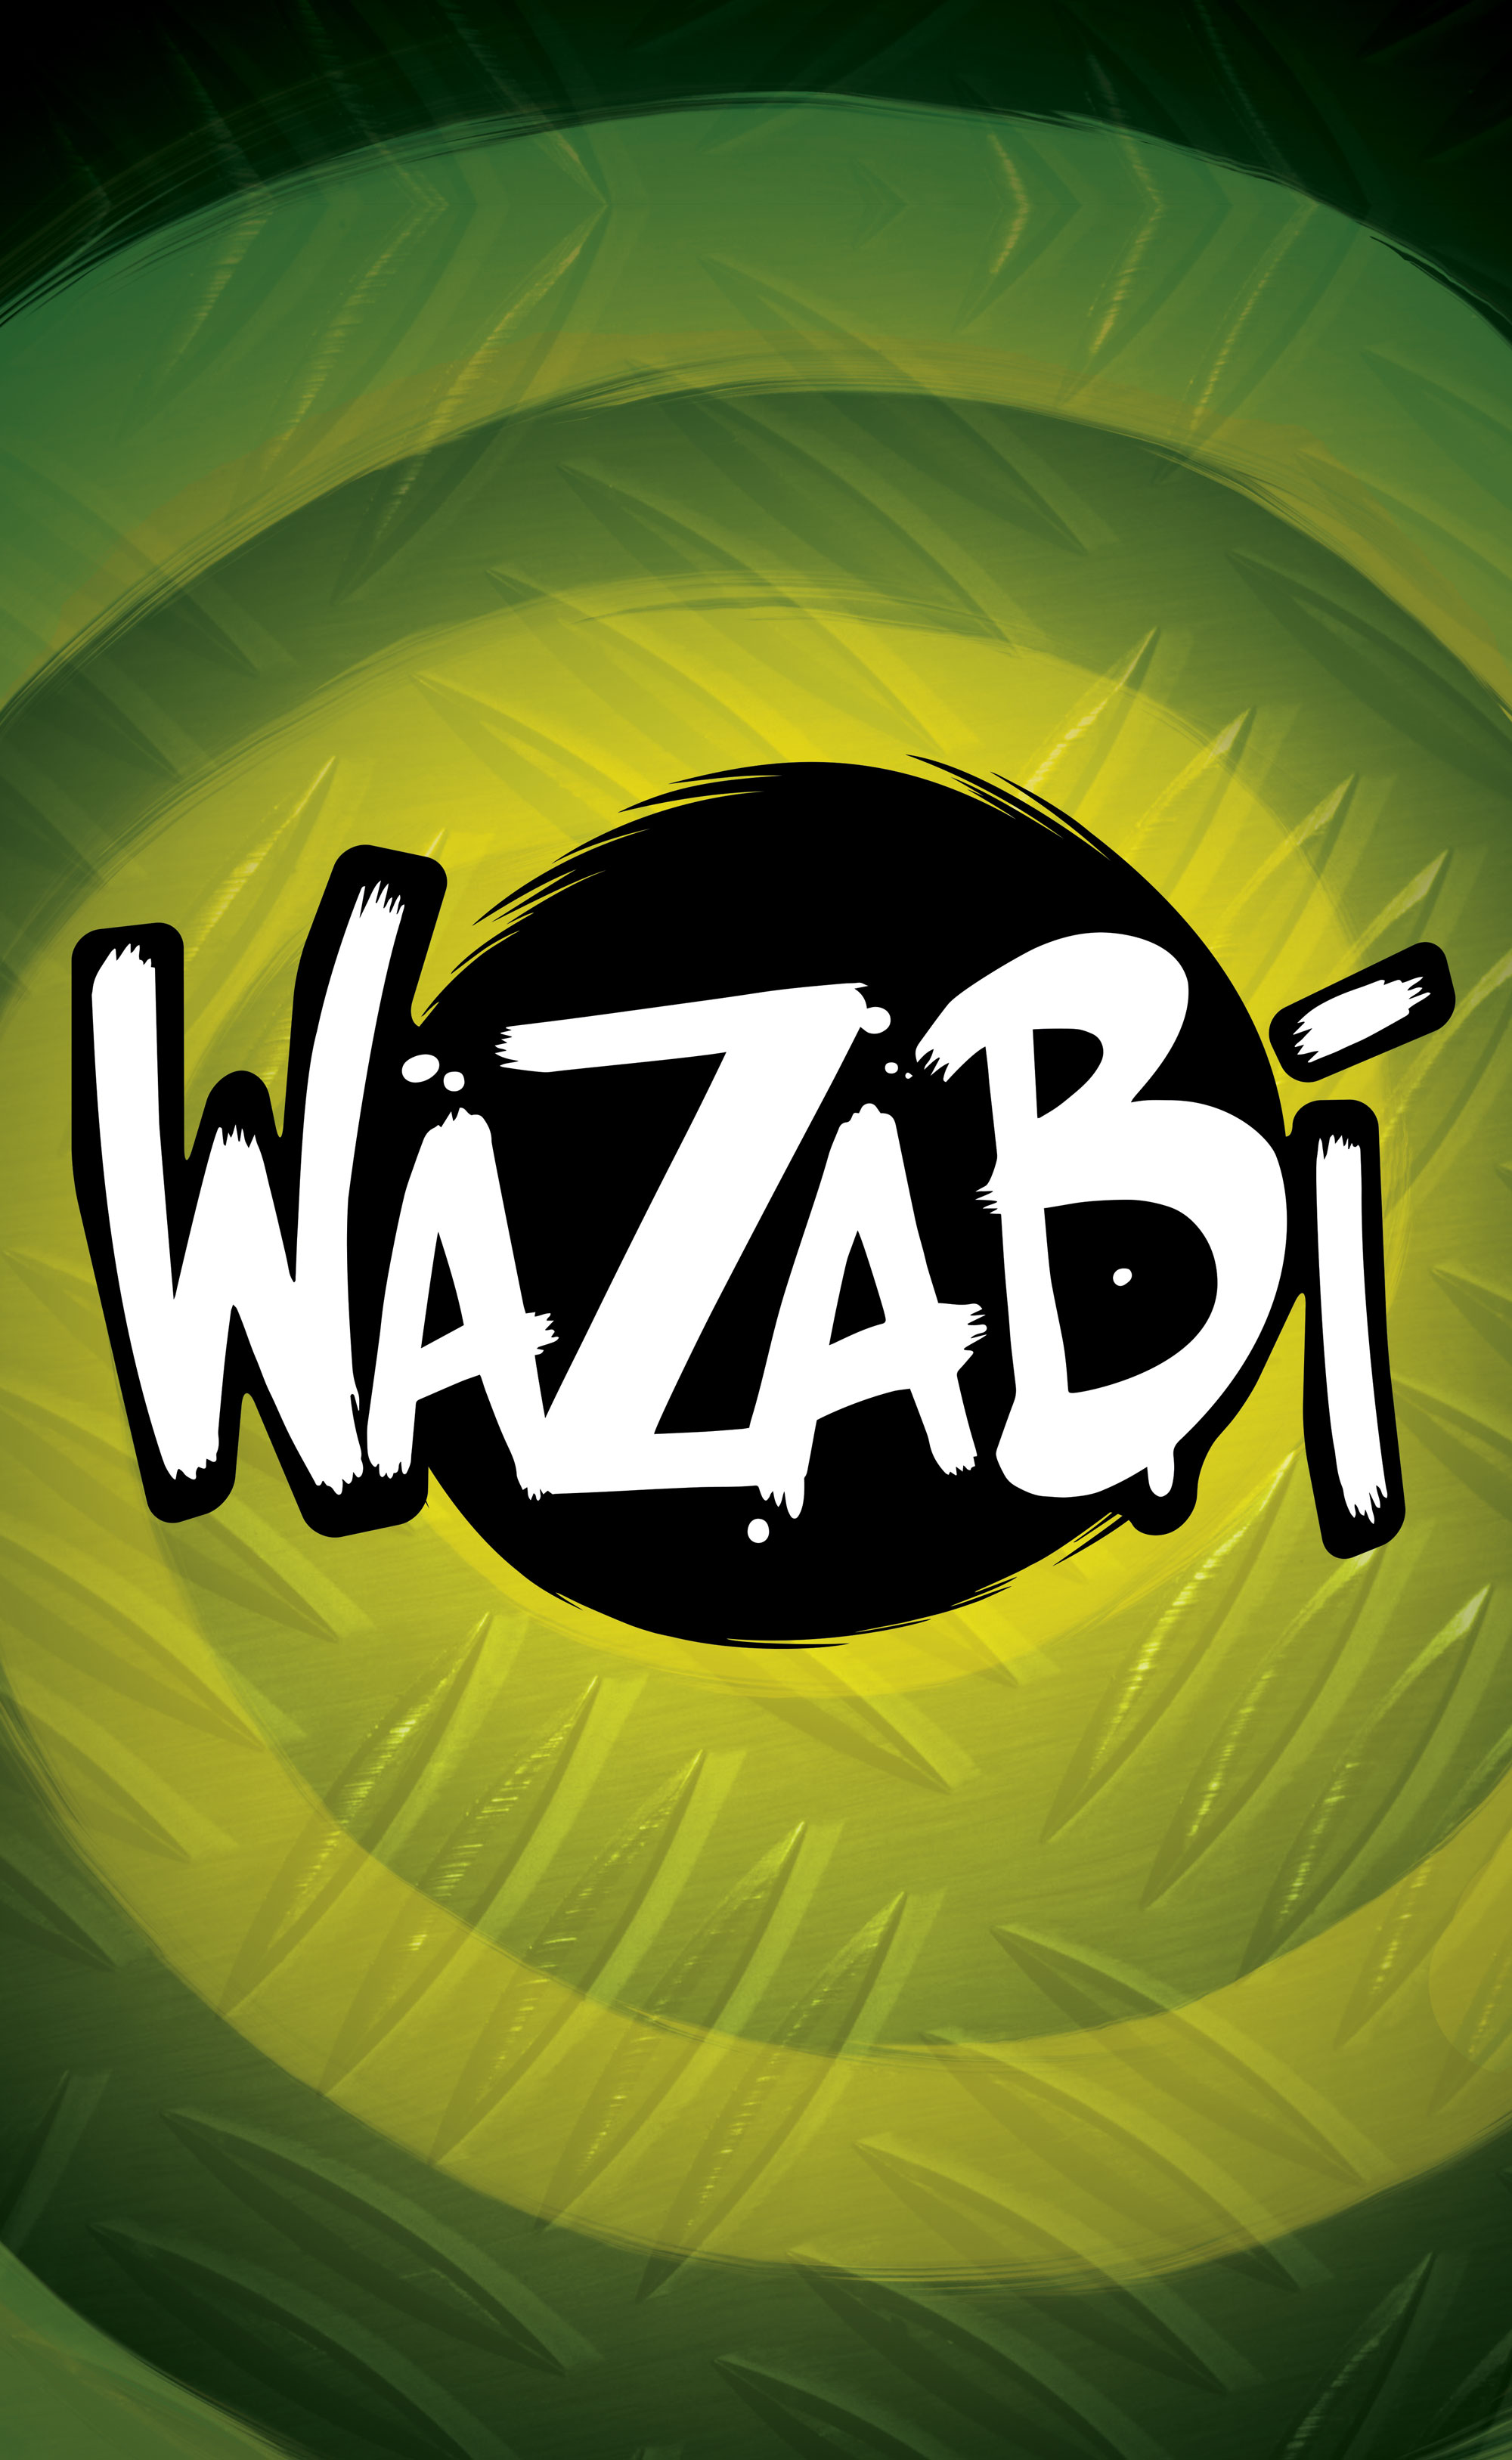 J2S] Wazabi - Gigamic - Carnet des geekeries